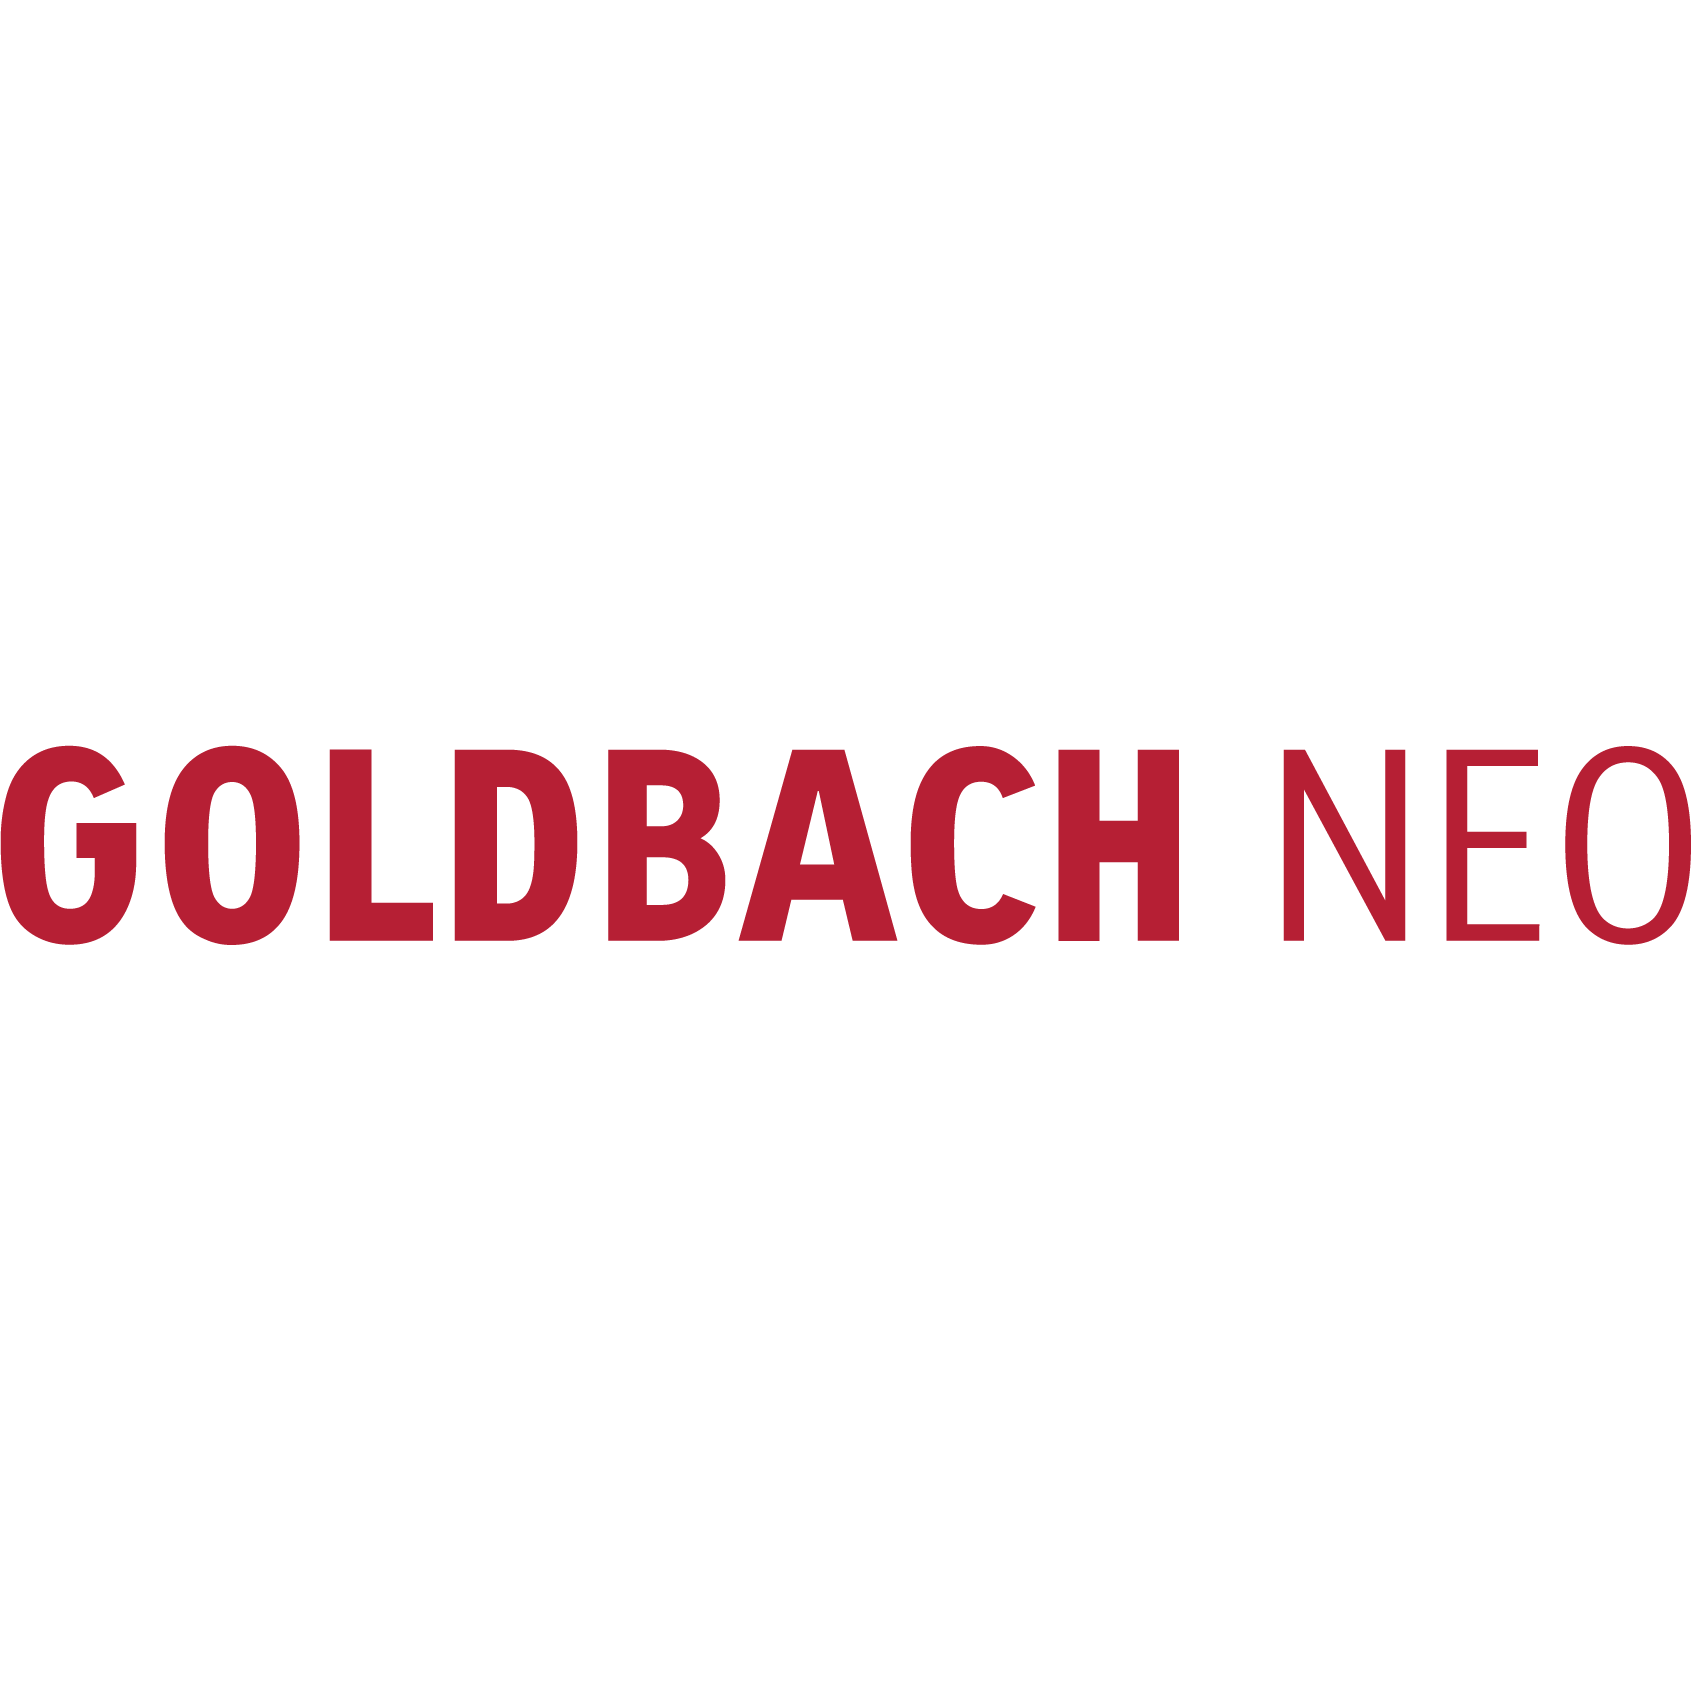 Goldbach Neo